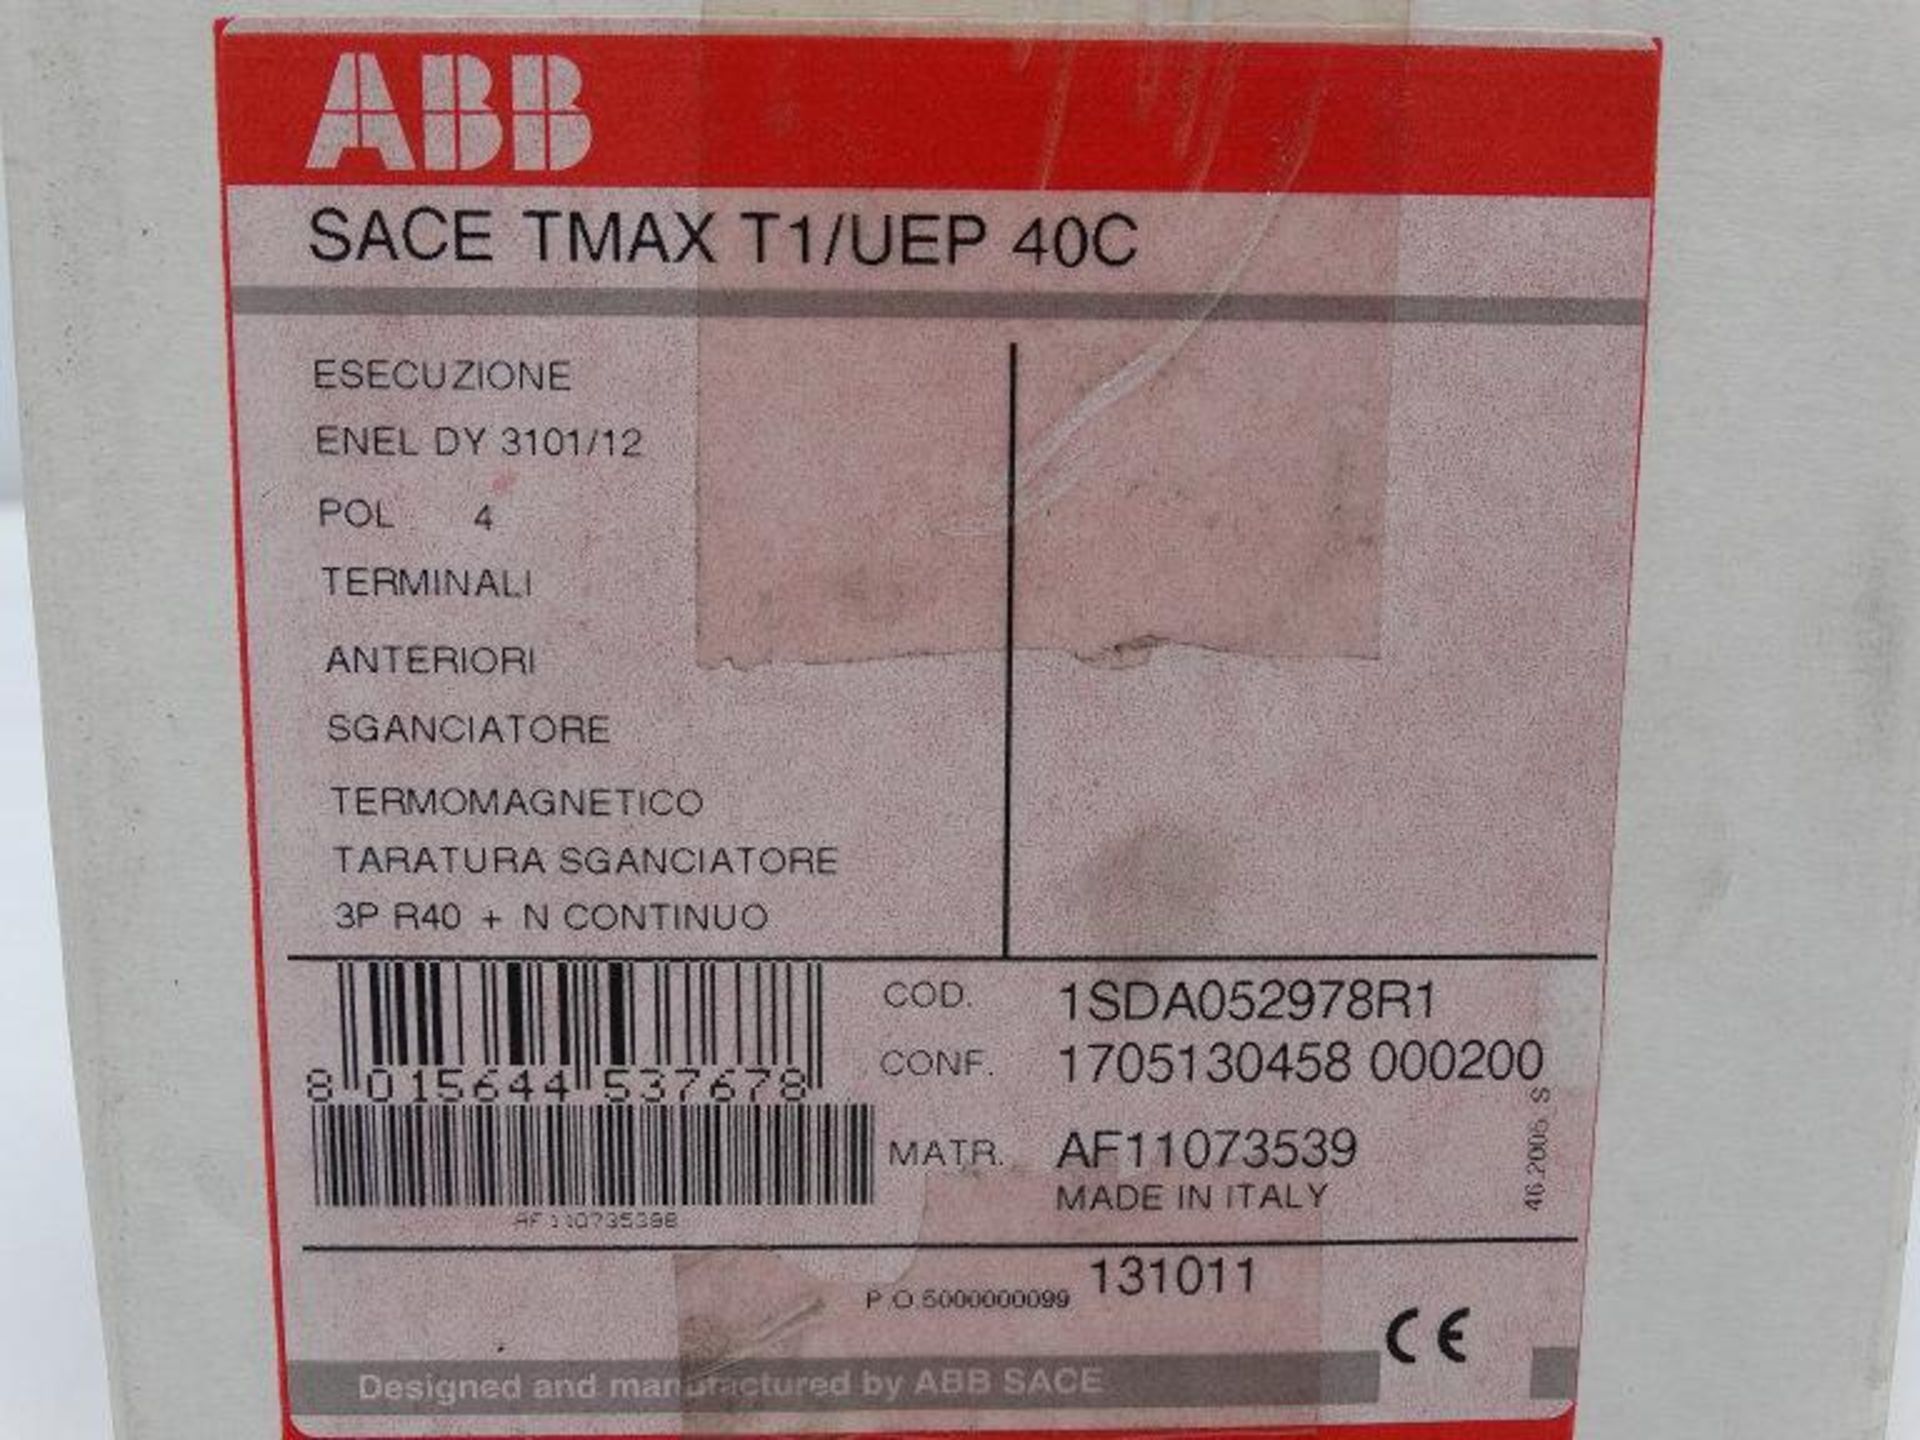 ASEA BROWN BOVERI 1SDA052978R1 (TMAX T1/UEP 40) CIRCUIT BREAKER - Image 3 of 3